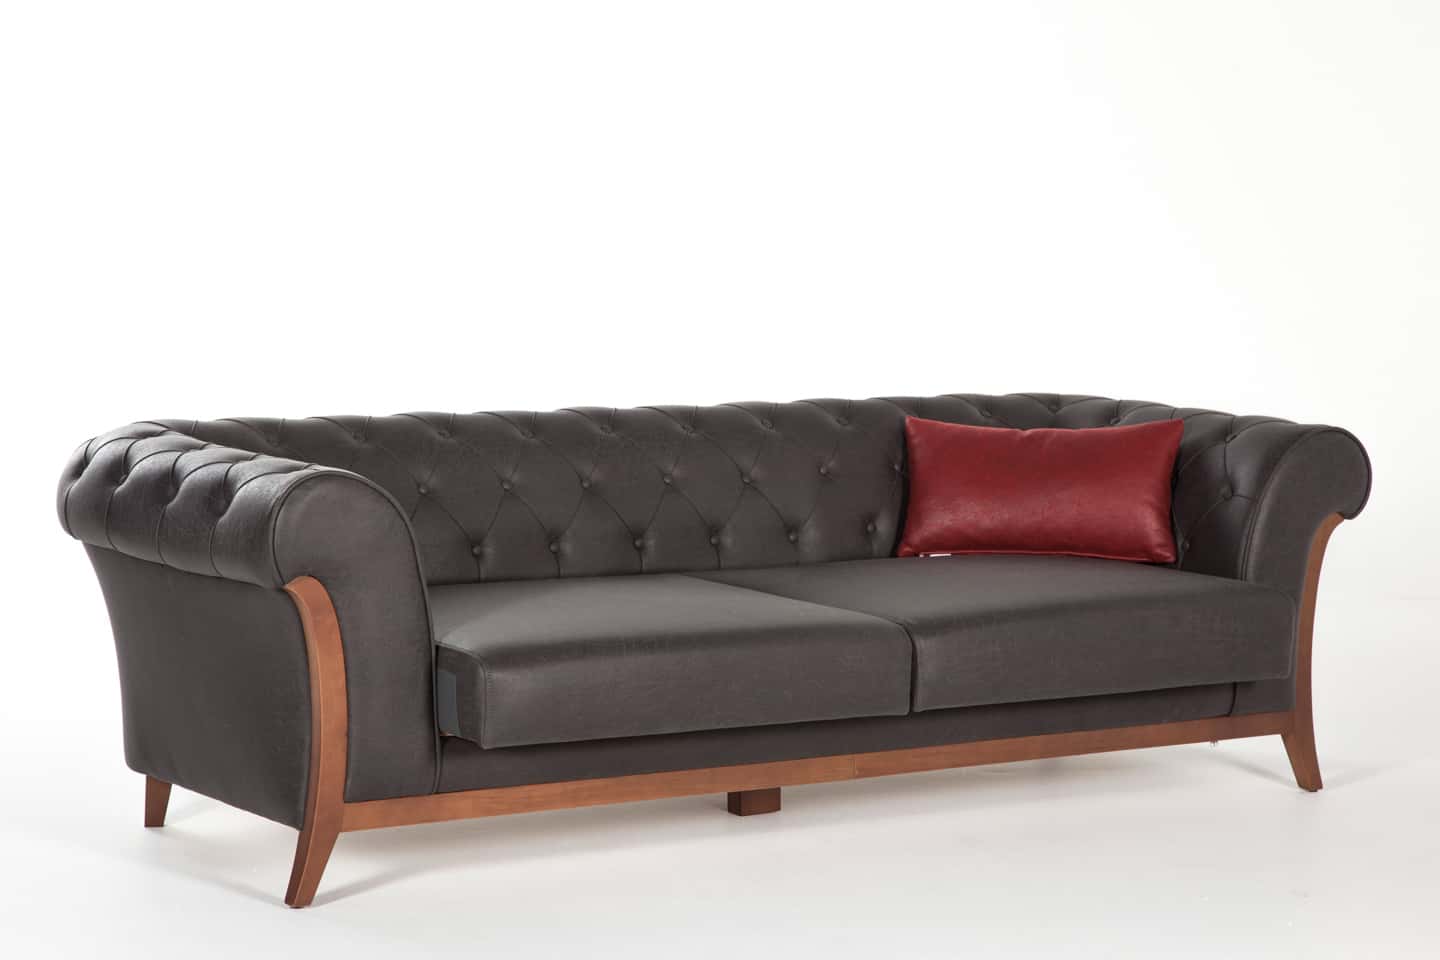 Alegro Royal Anthracite 3 Seat Sleeper Sofa at Futonland